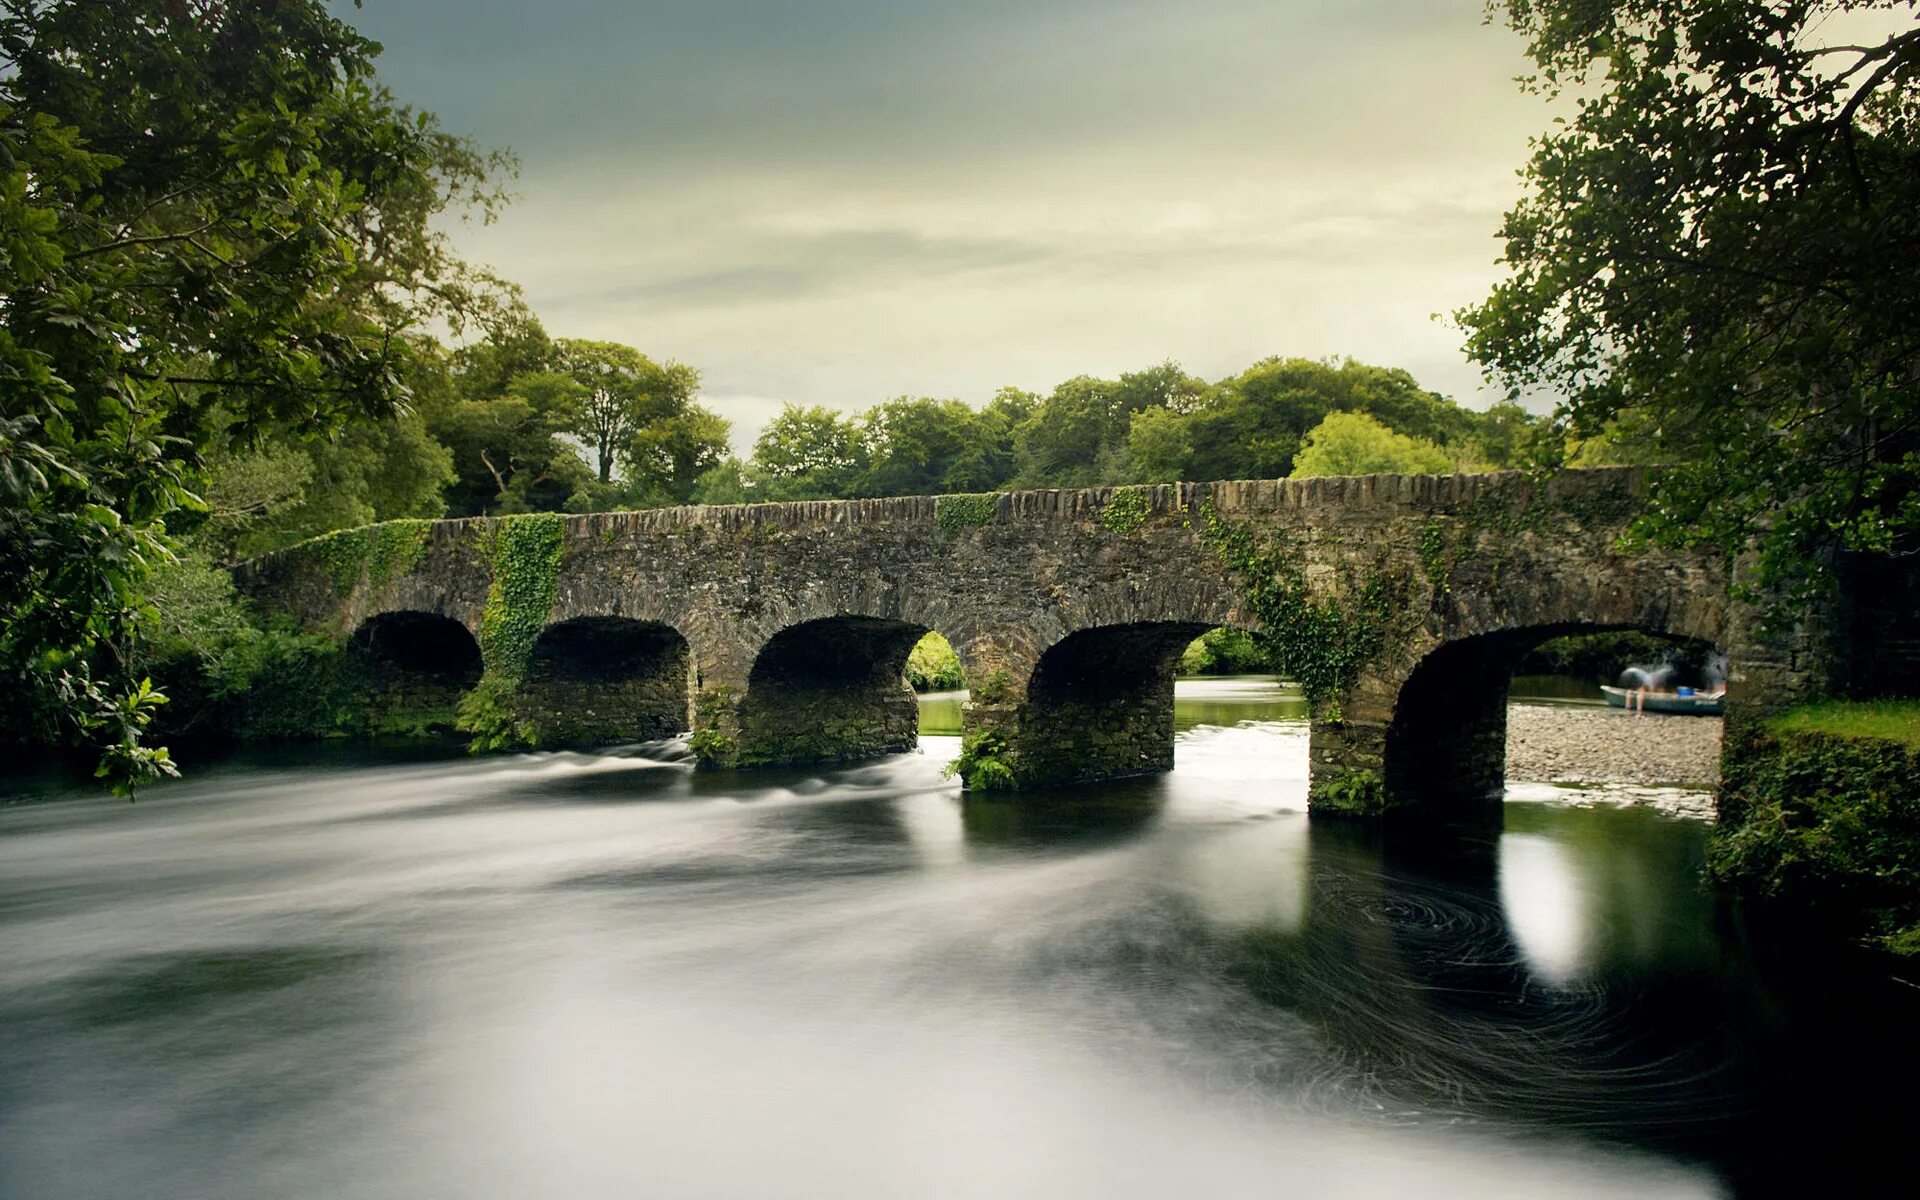 Обои качества 1080. Мост Шотландия Ирландия. Мост Овертоун Шотландия. Каменная Мостовая Ирландия. Пауэрскорт Ирландия.